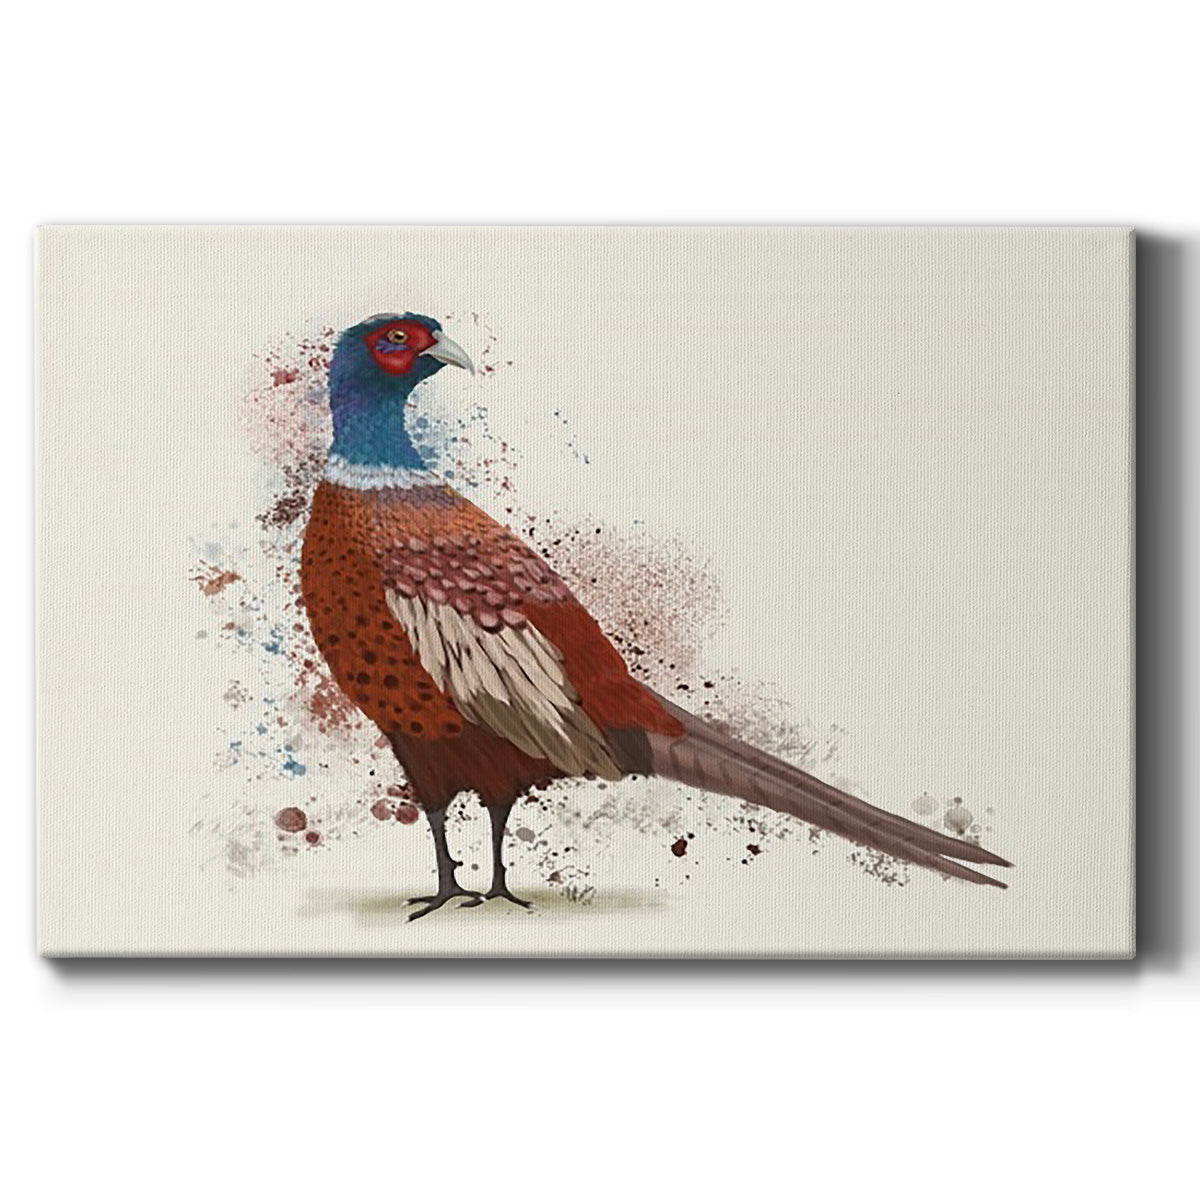 Pheasant Splash 5 Premium Gallery Wrapped Canvas - Ready to Hang